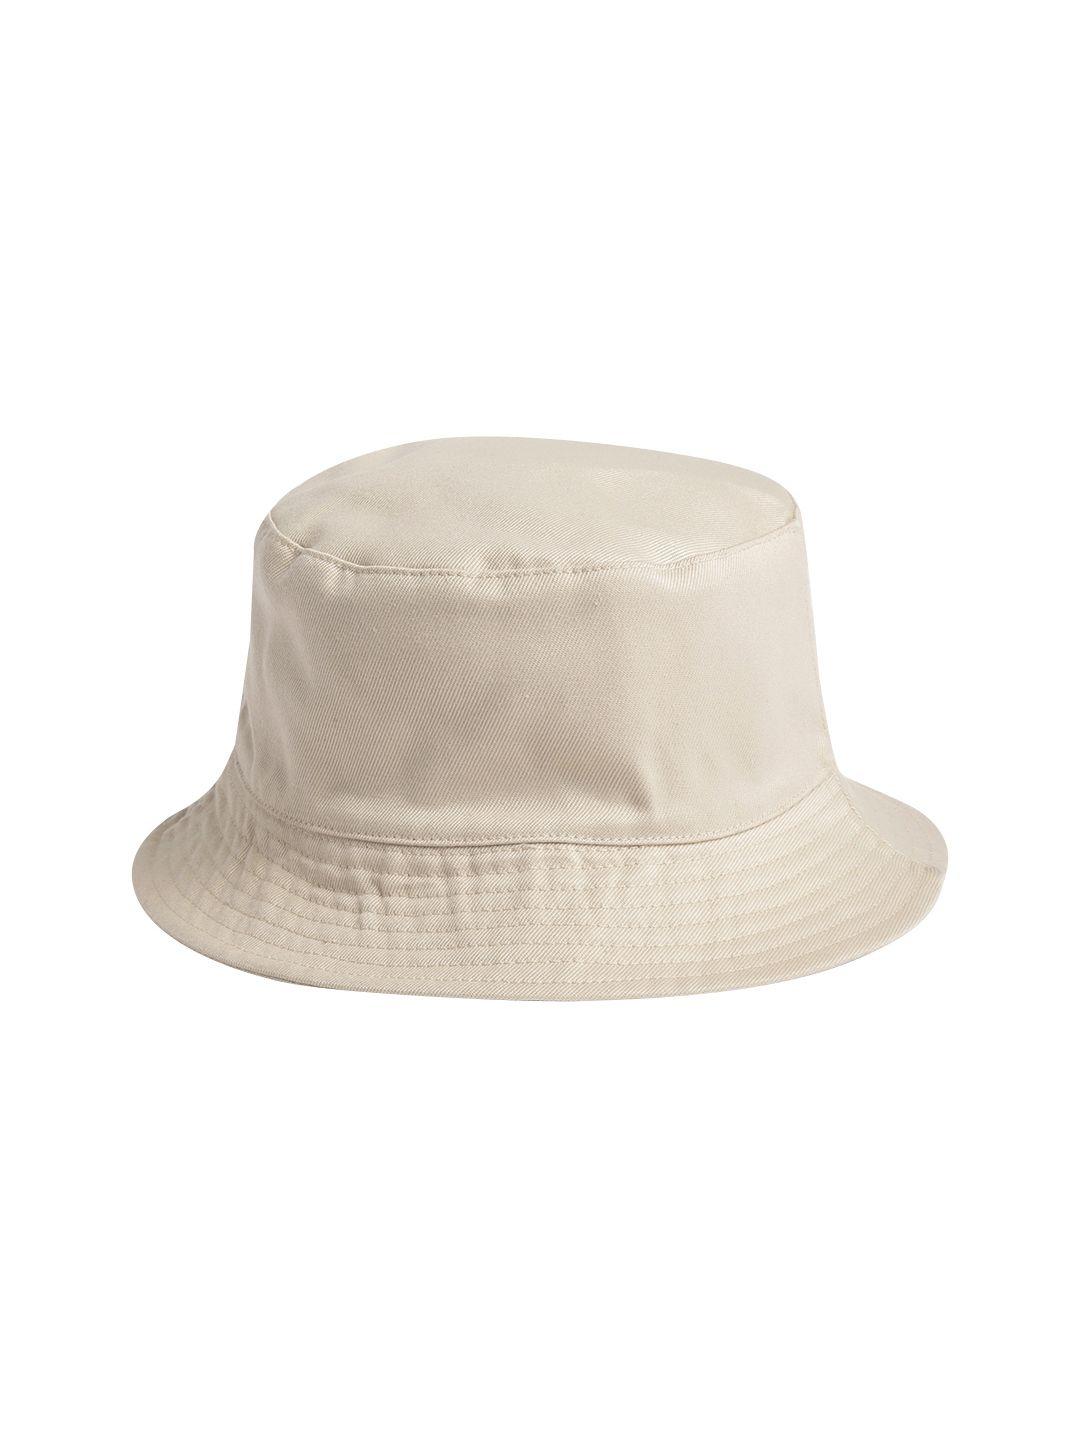 blueberry unisex solid bucket hat